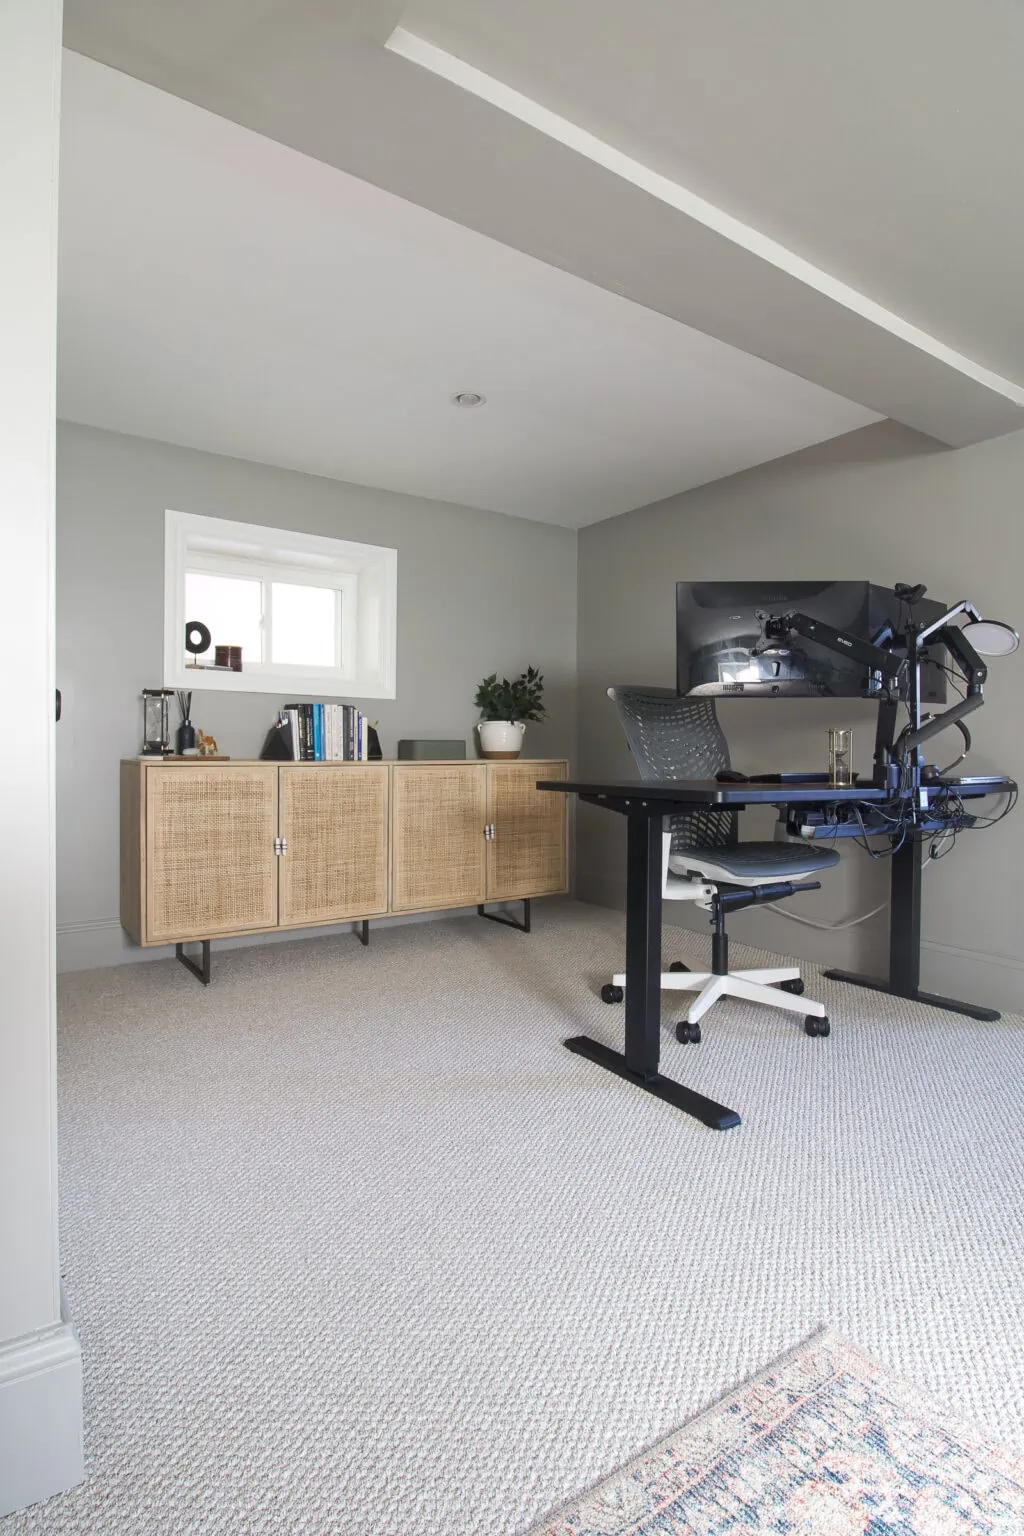 Finn's home office space